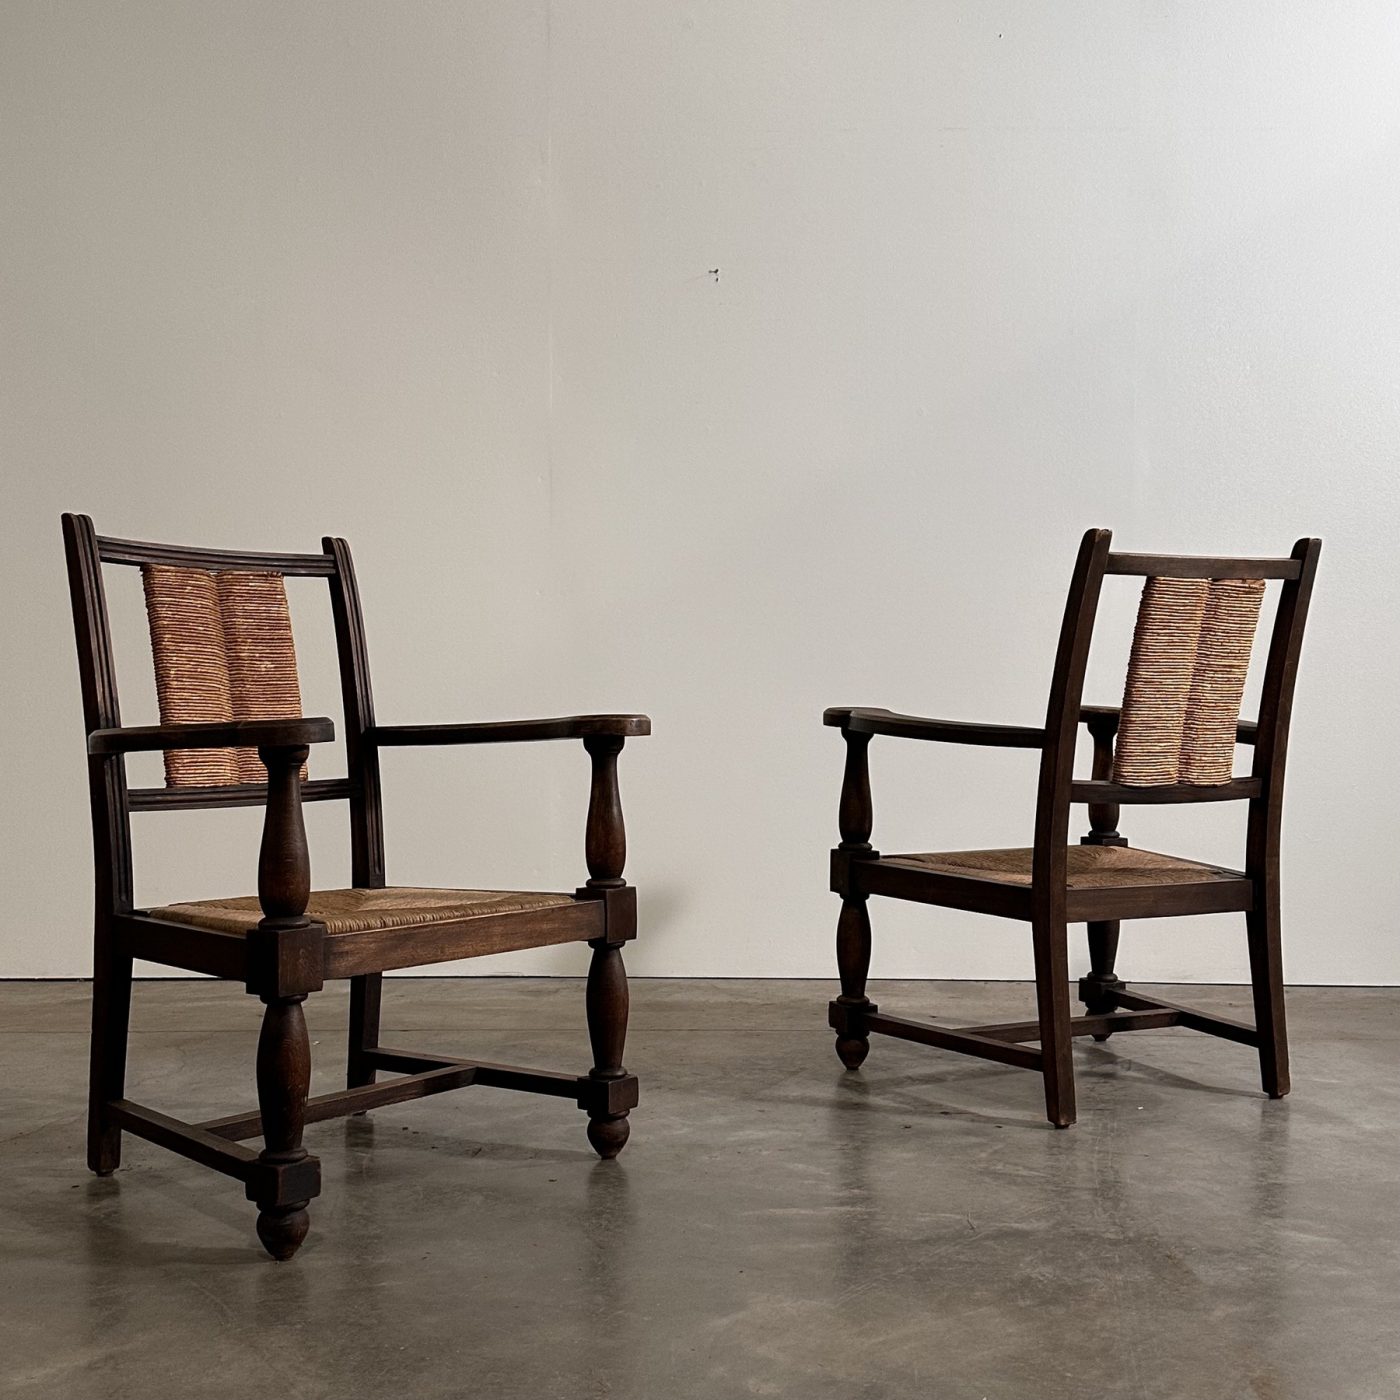 objet-vagabond-armchairs0004